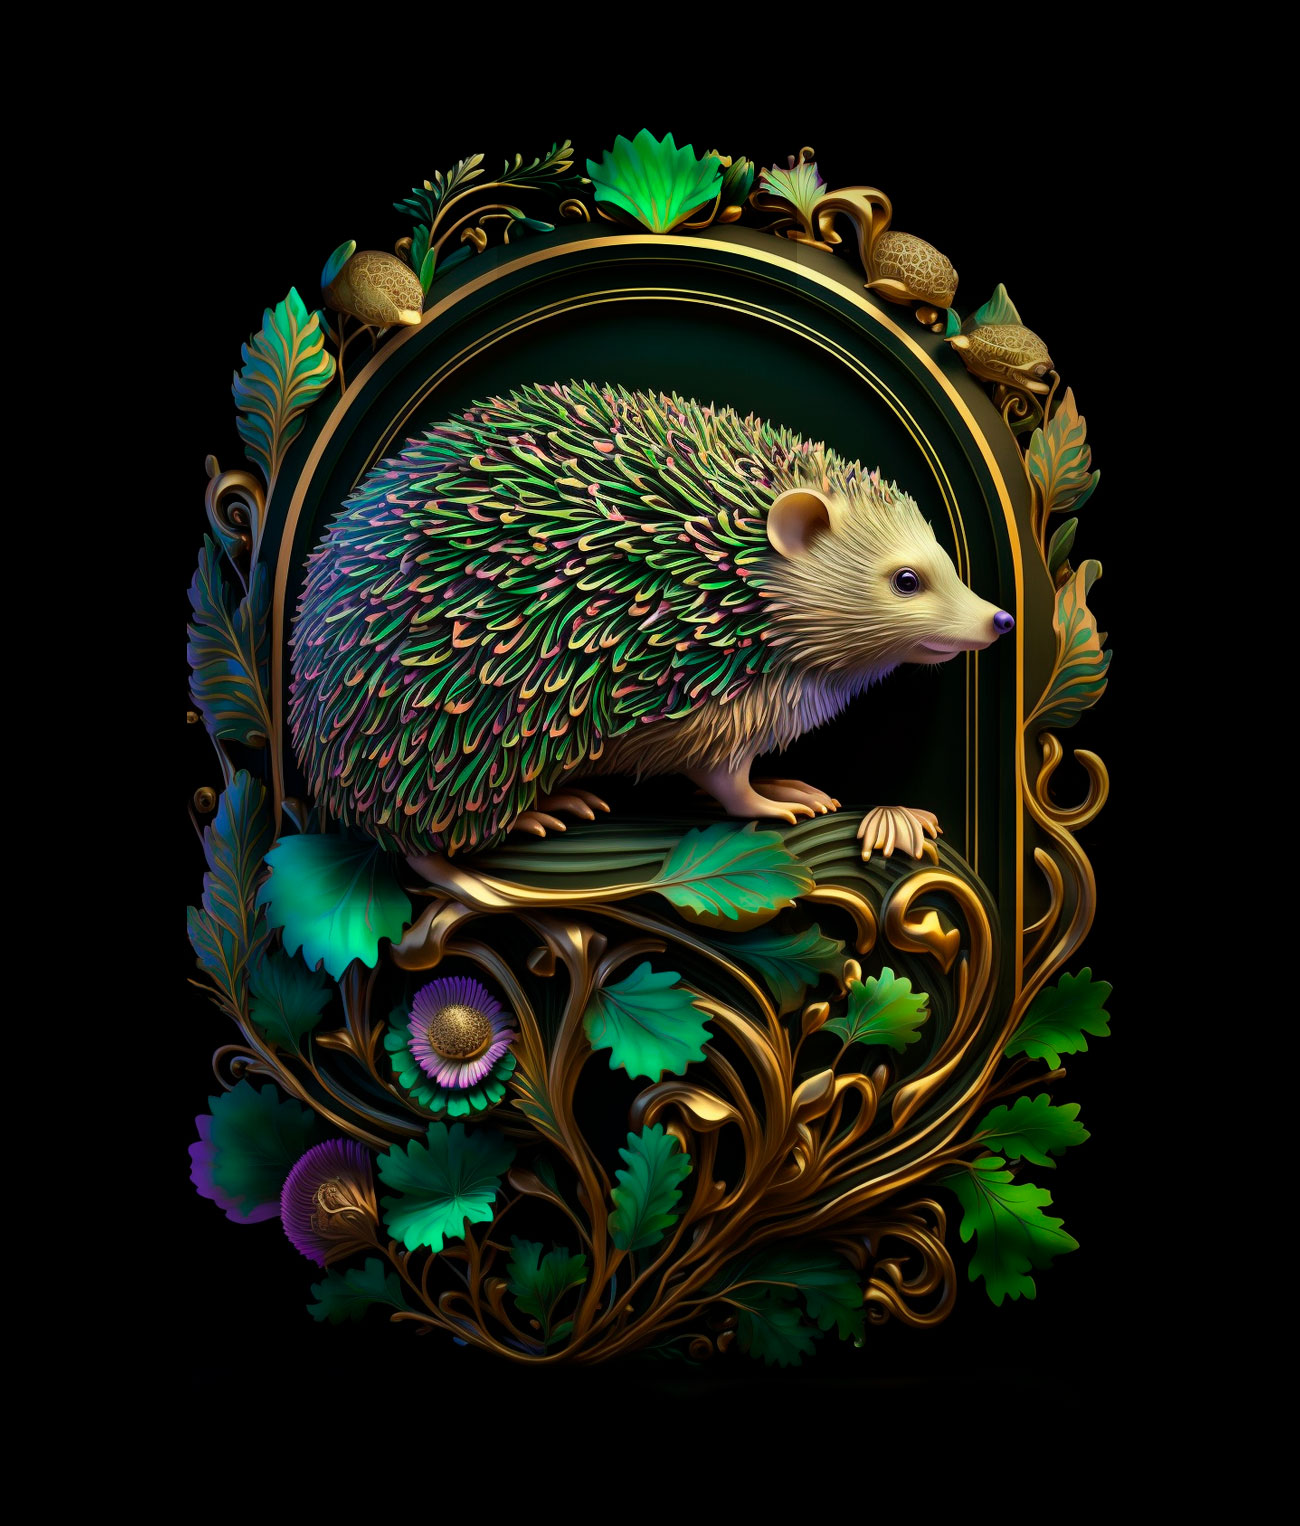 3D render of a hedgehog